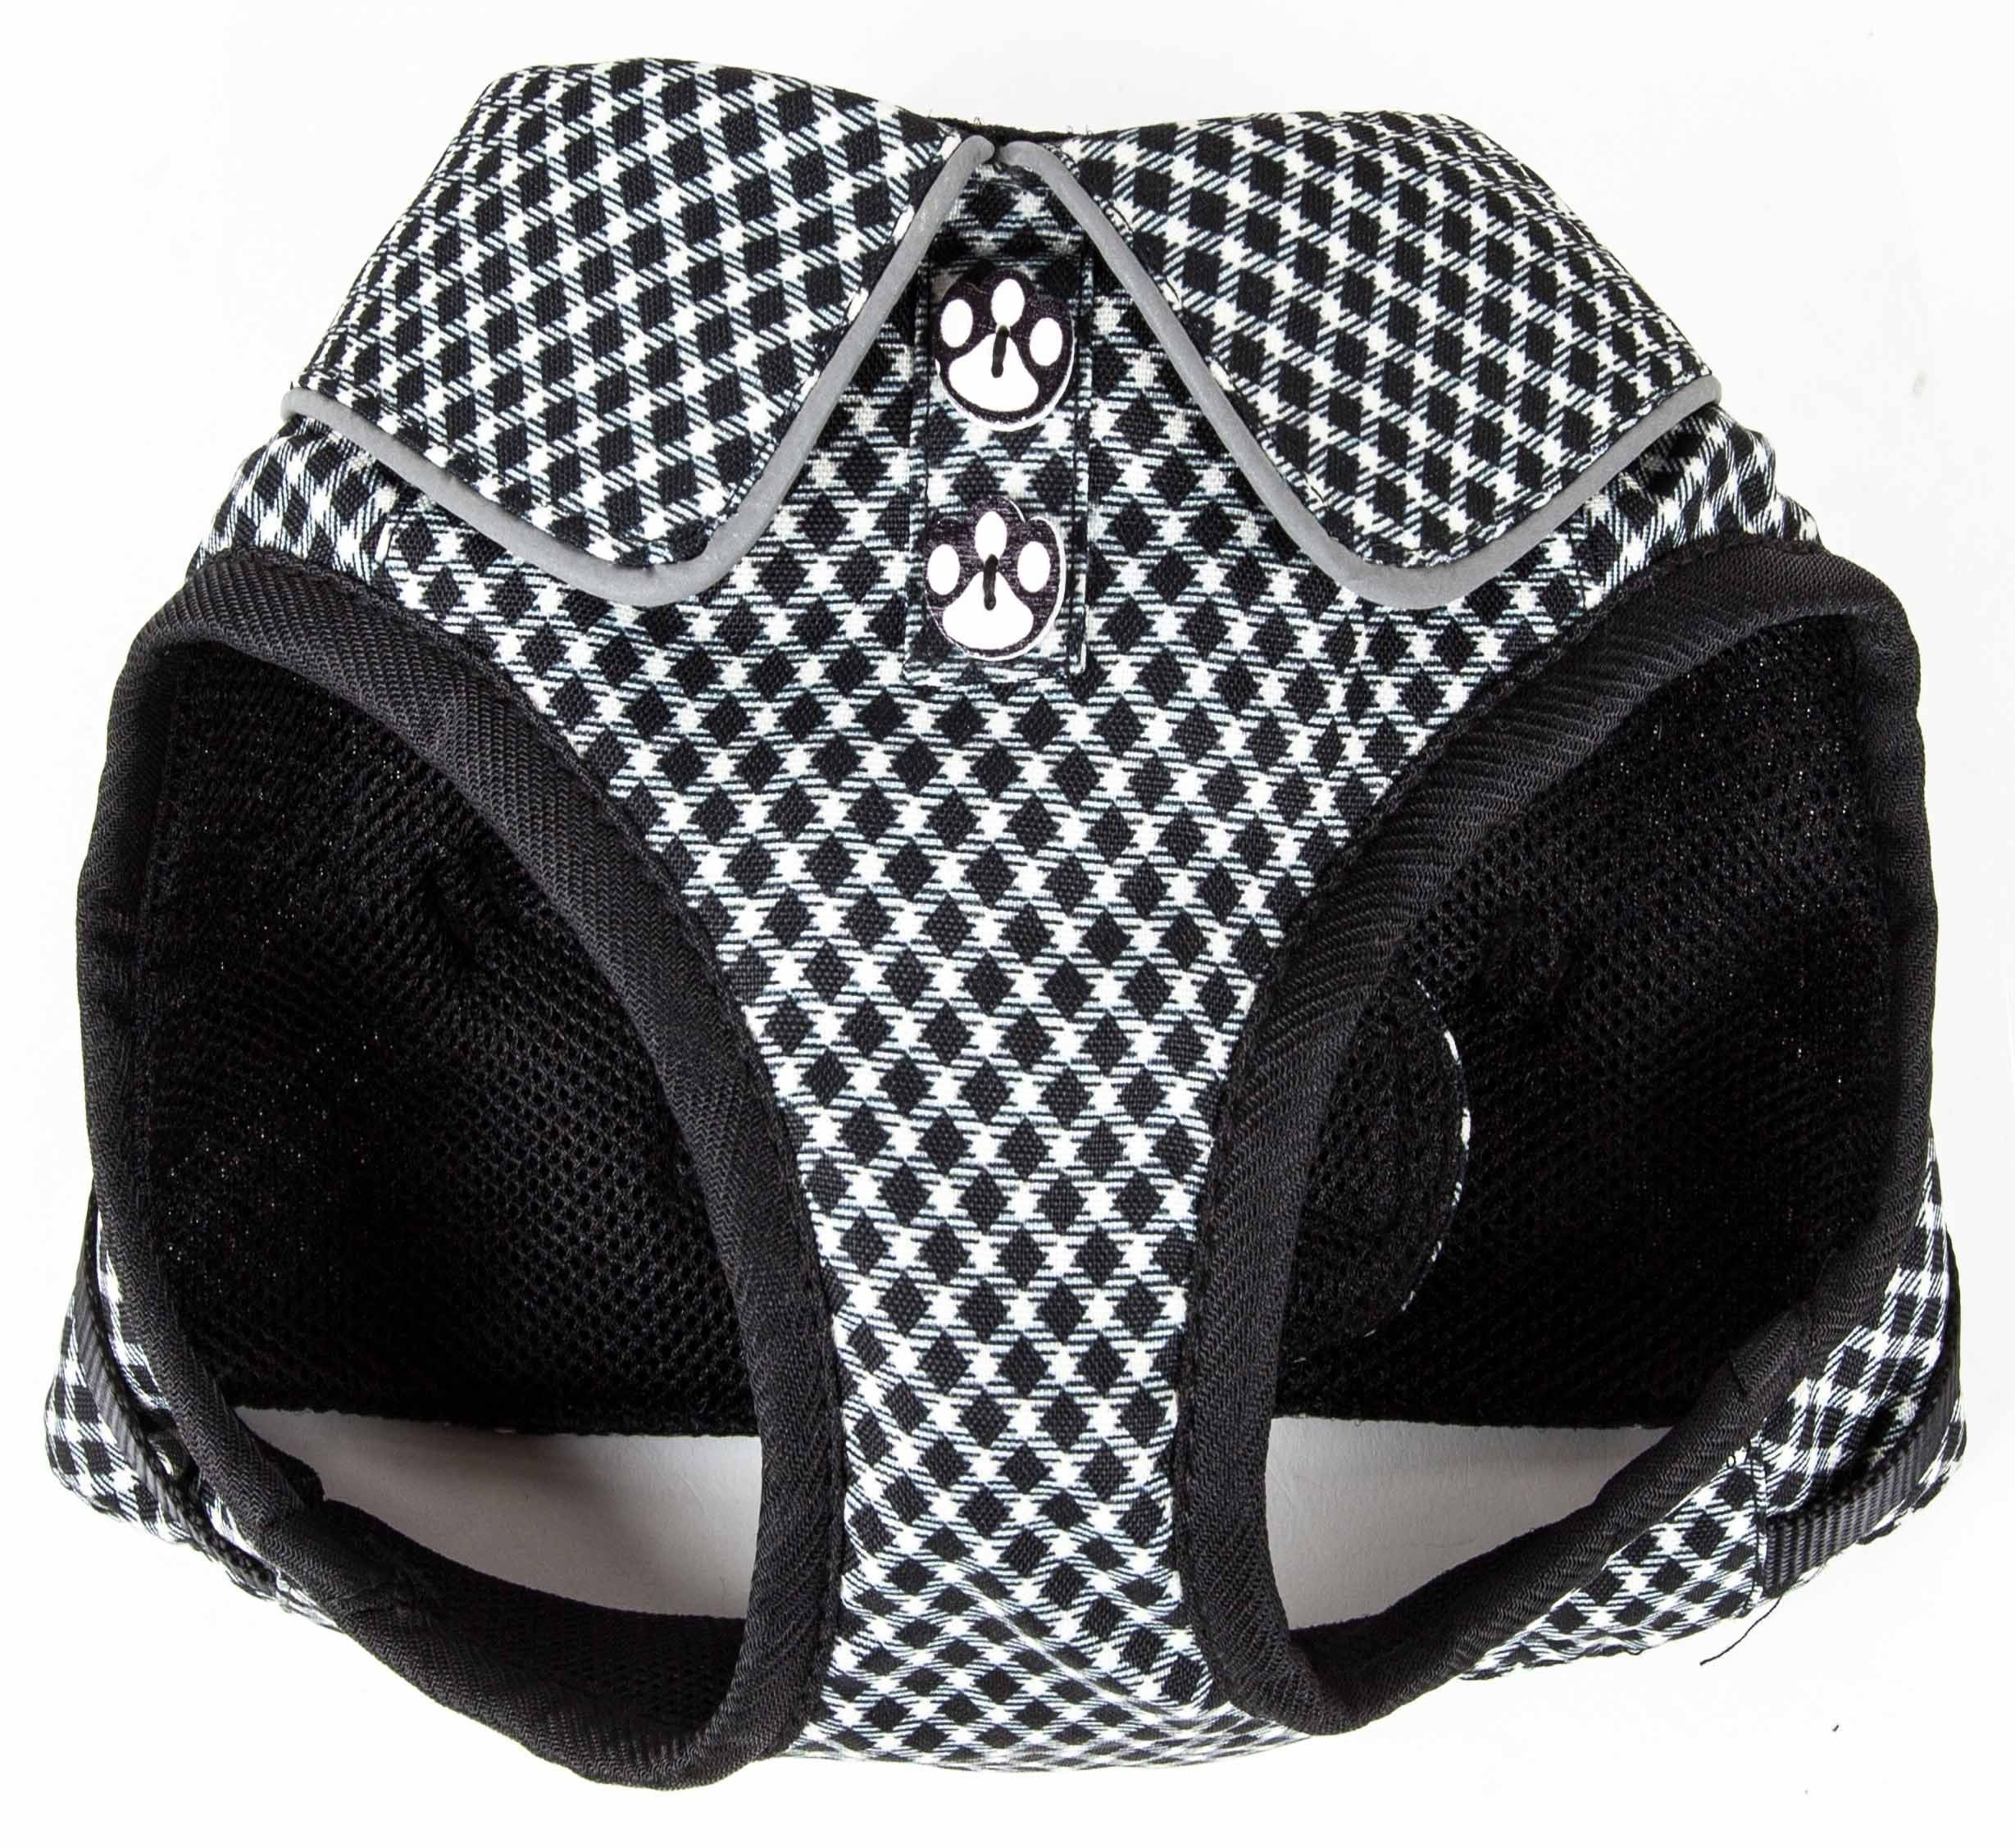 Pet Life ® 'Checkerwag' Checkered Mesh Reversed and Adjustable Fashion Dog Harness  